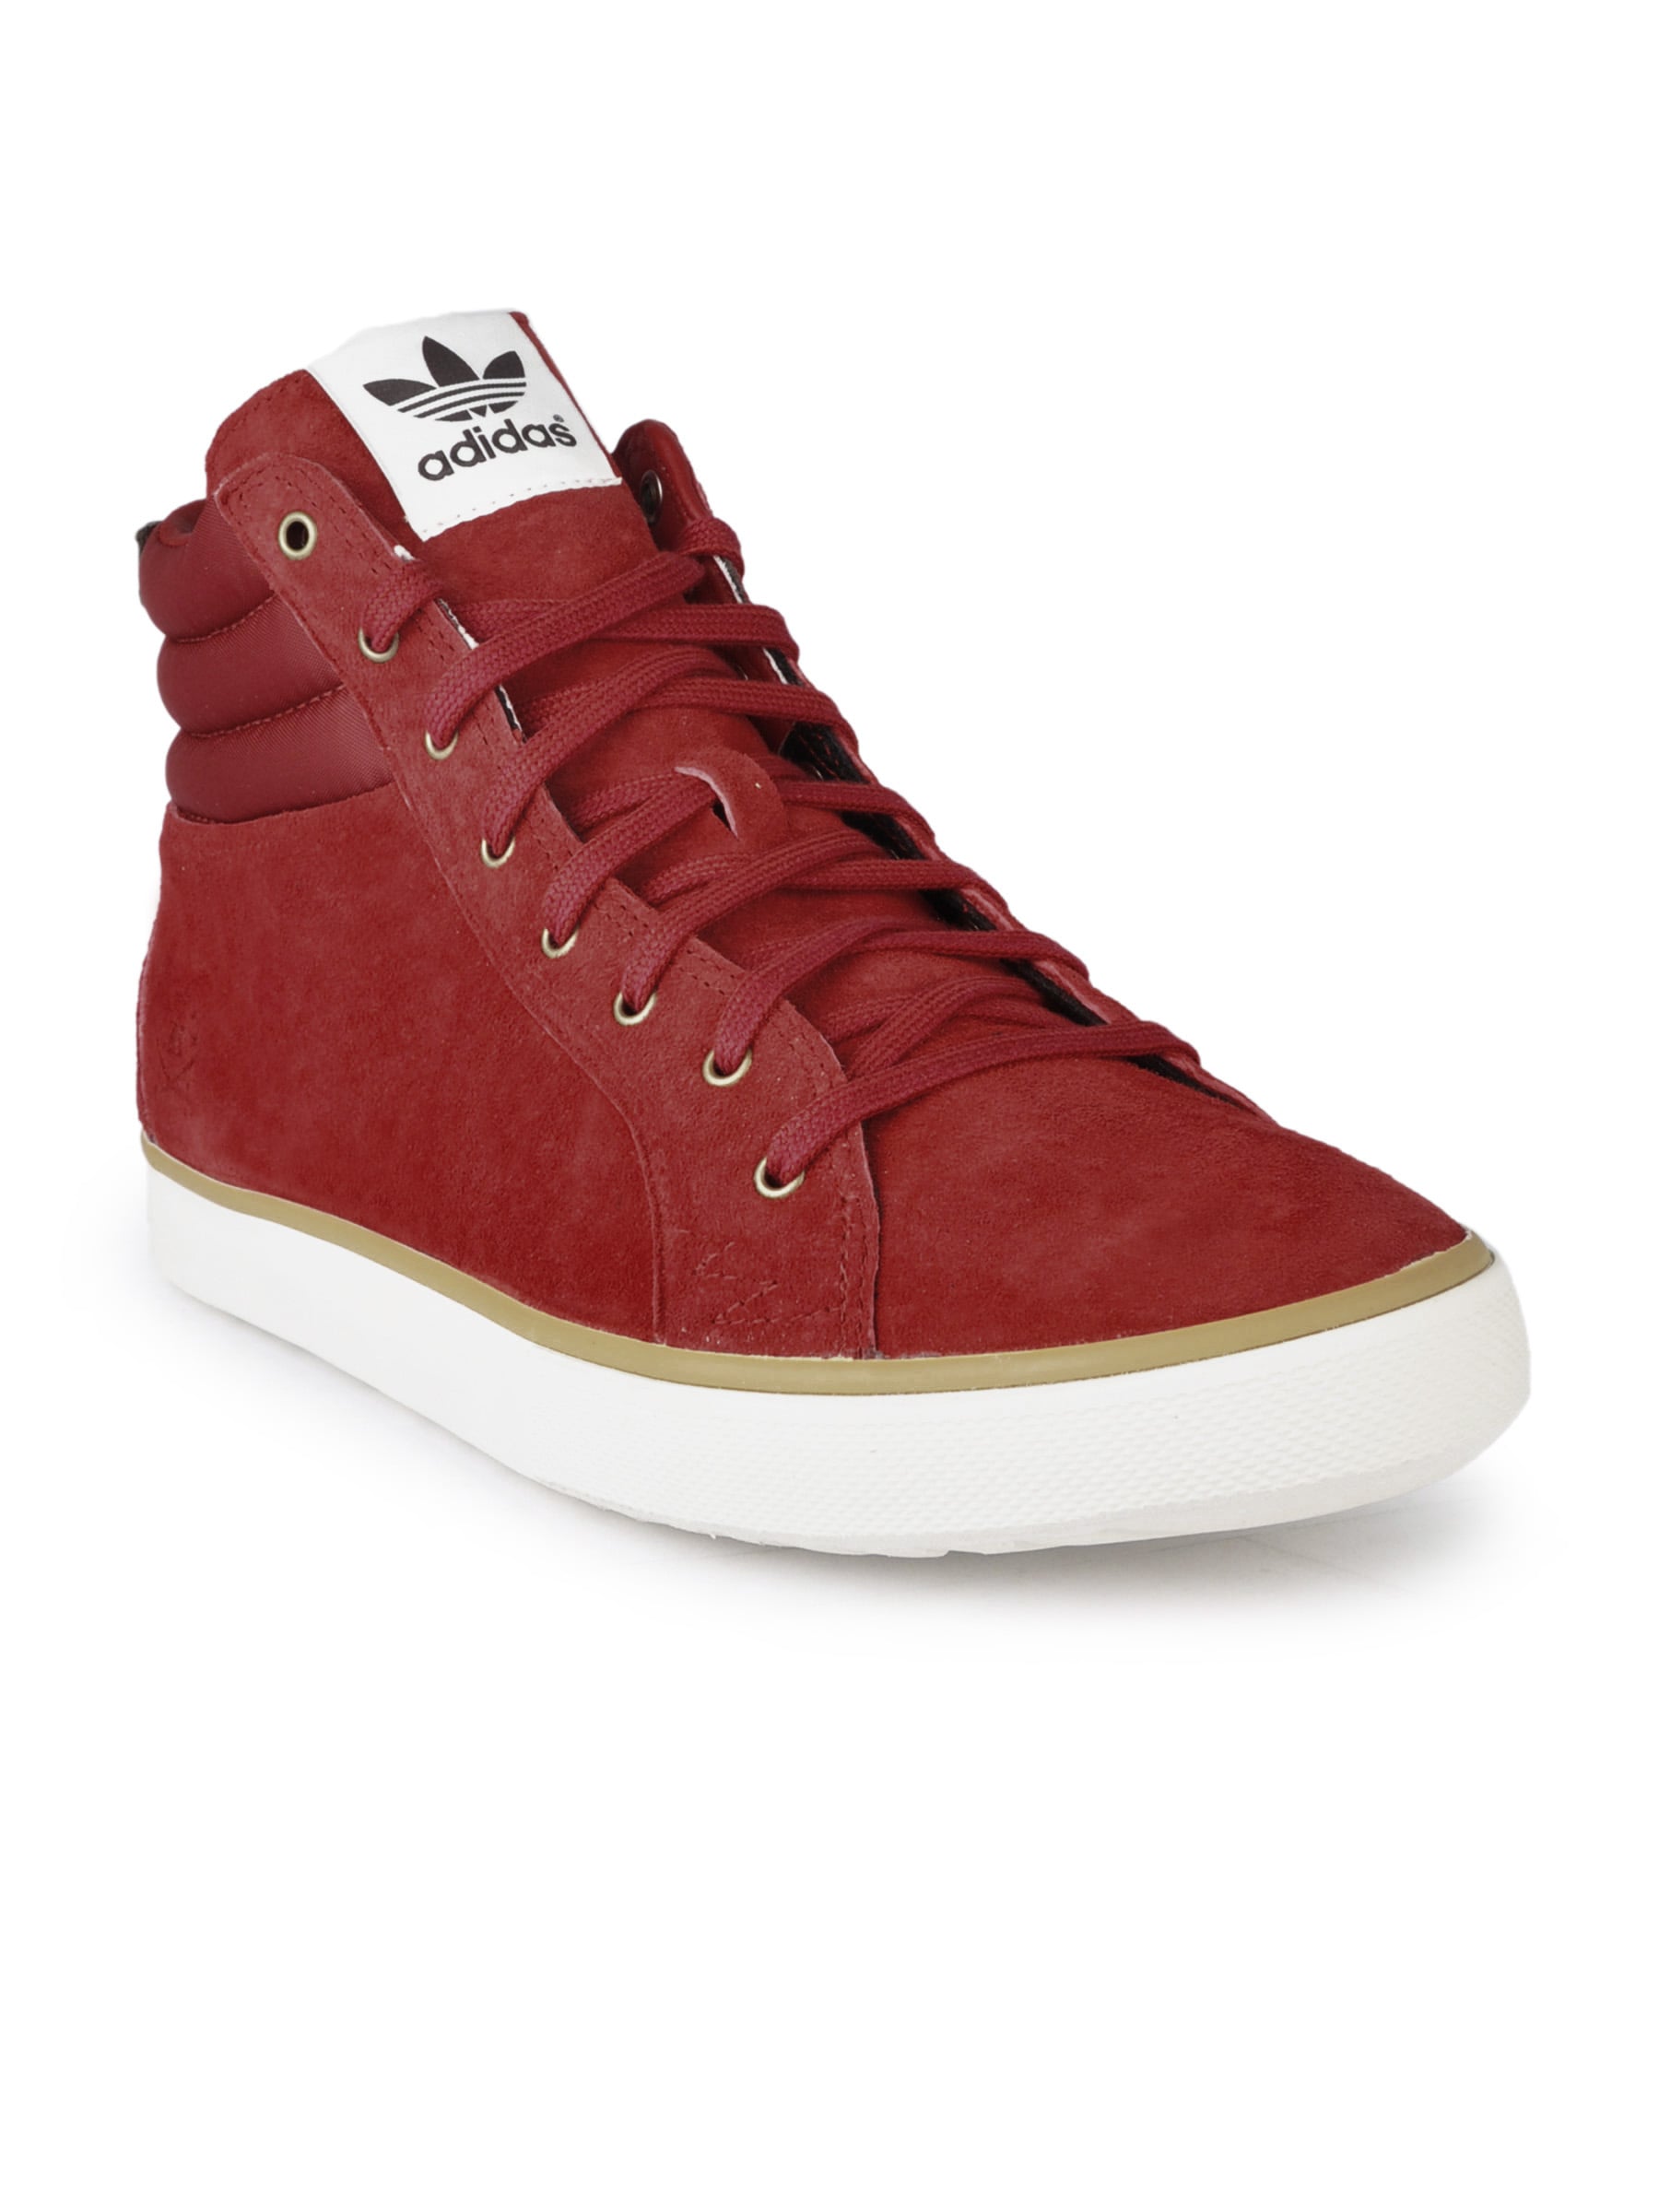 ADIDAS Originals Men Valley-Fdt Red Casual Shoes